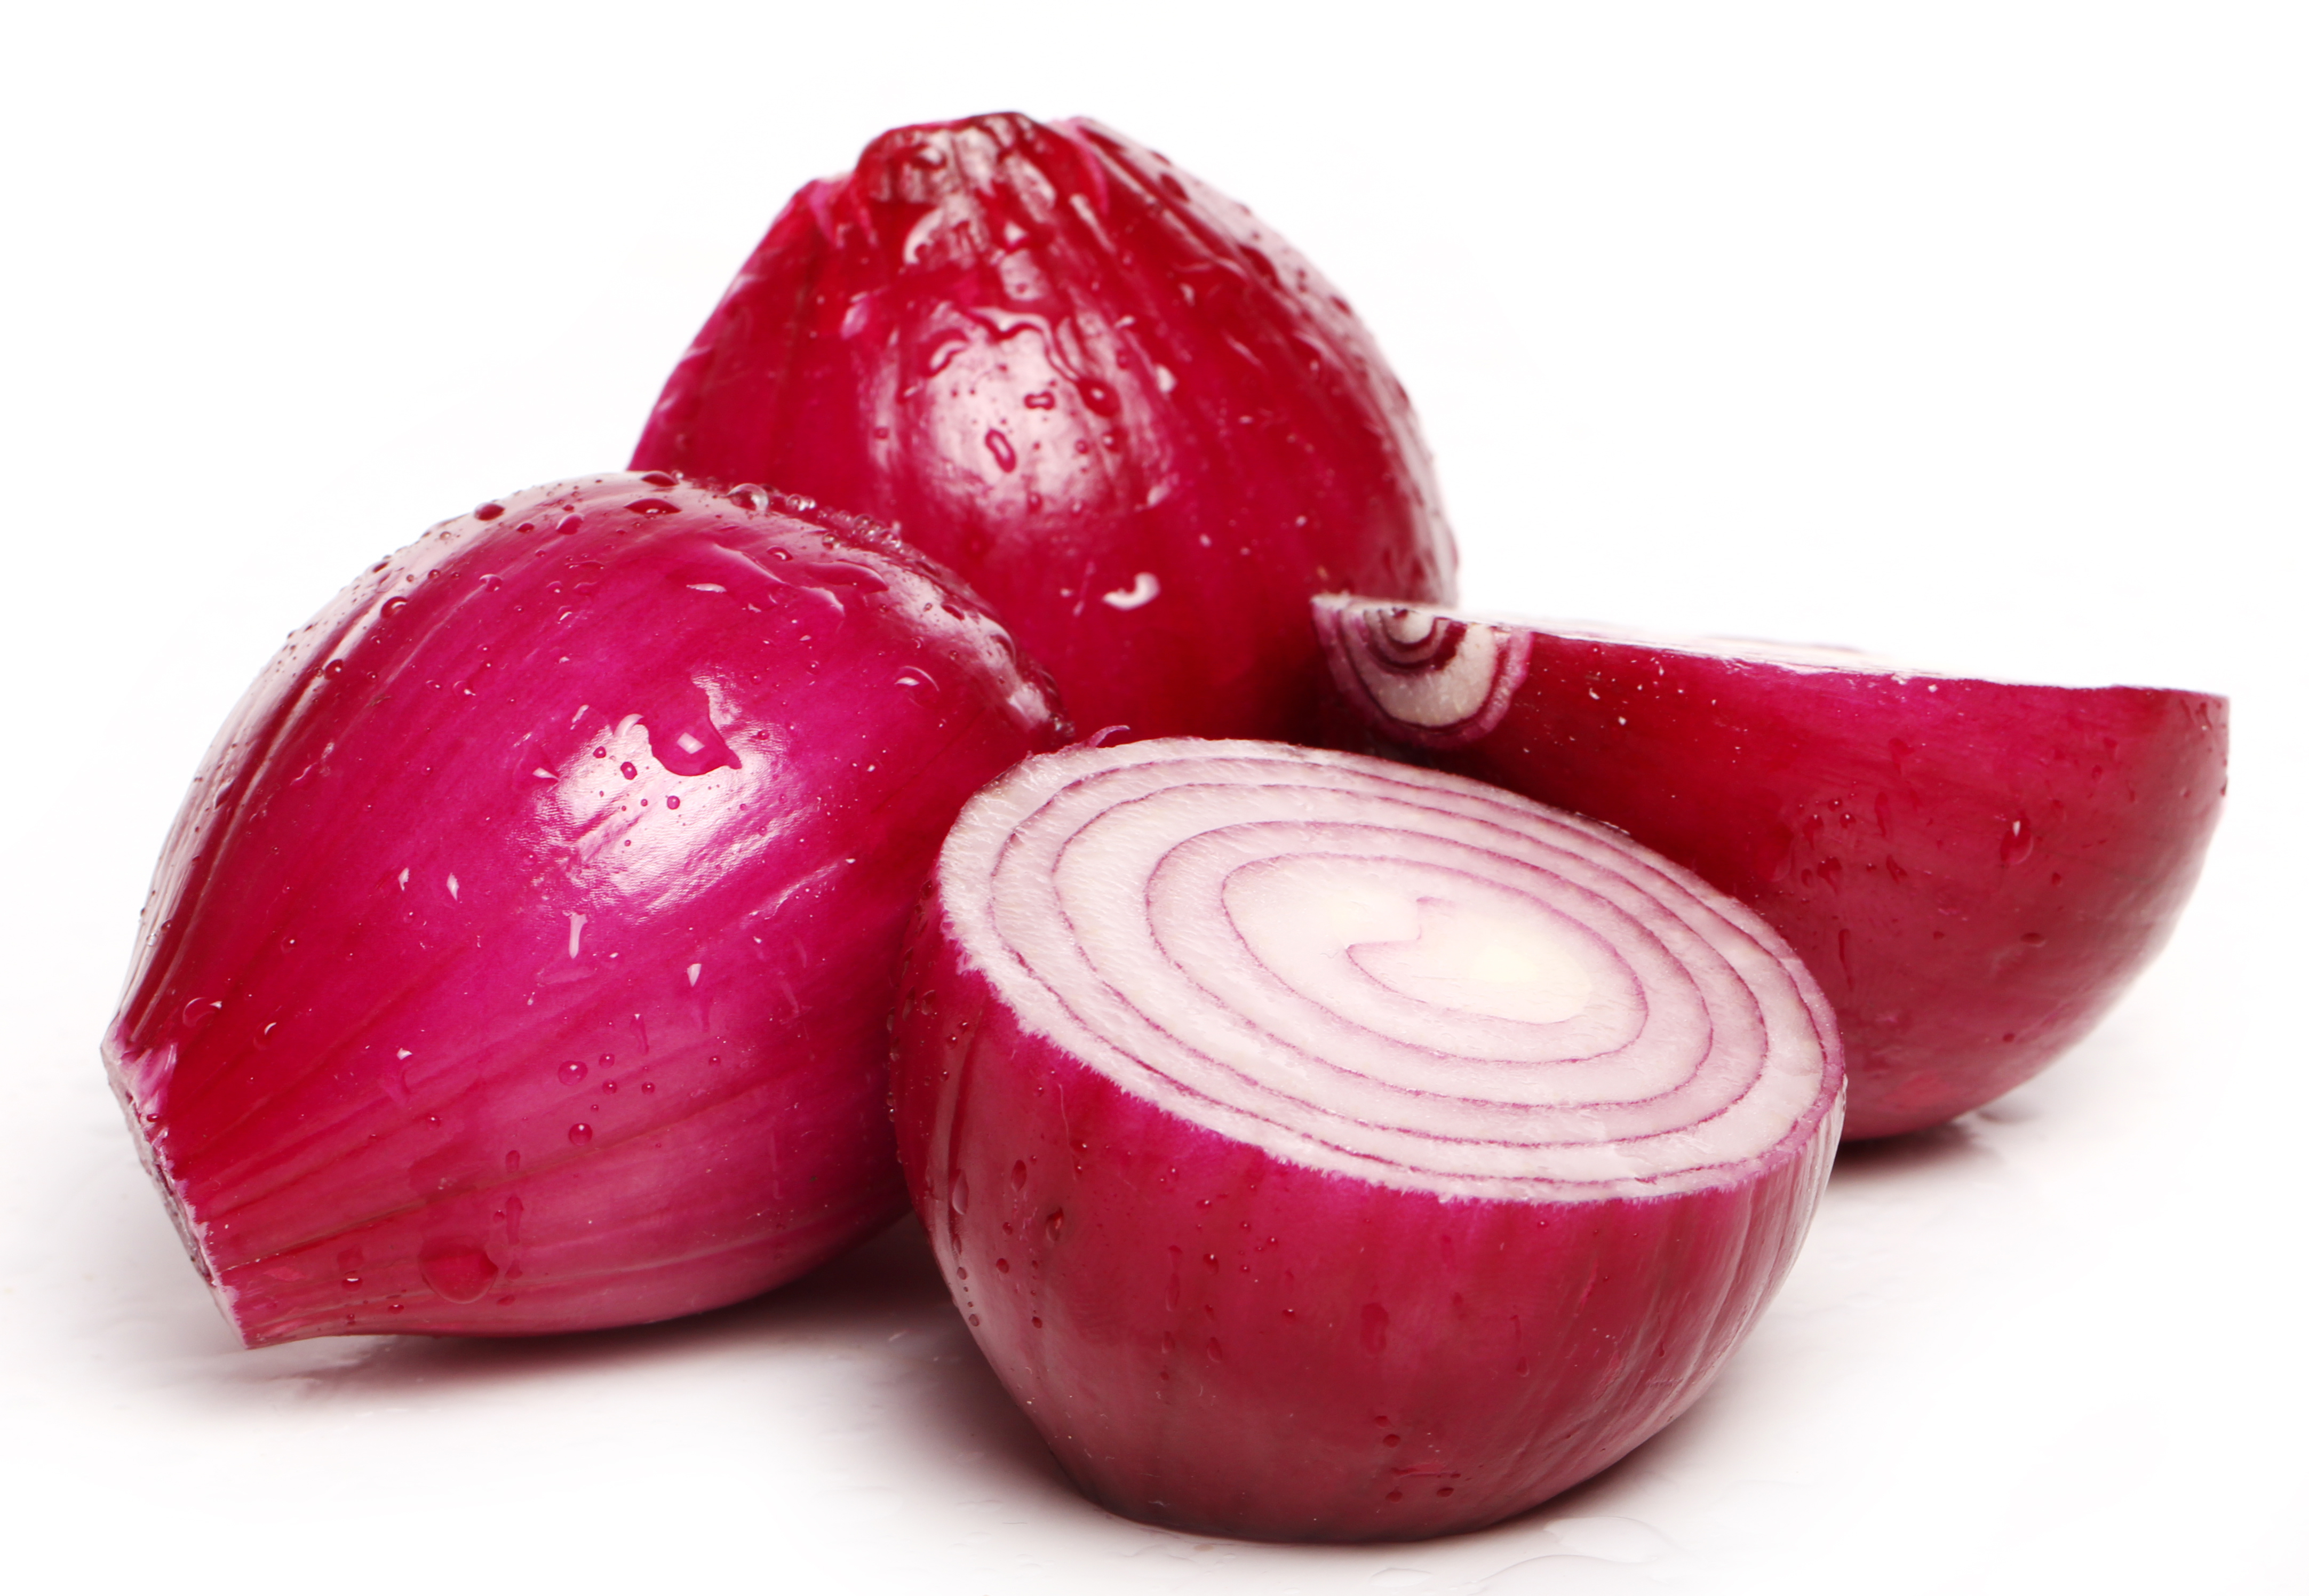 Onion will cure baldness problem